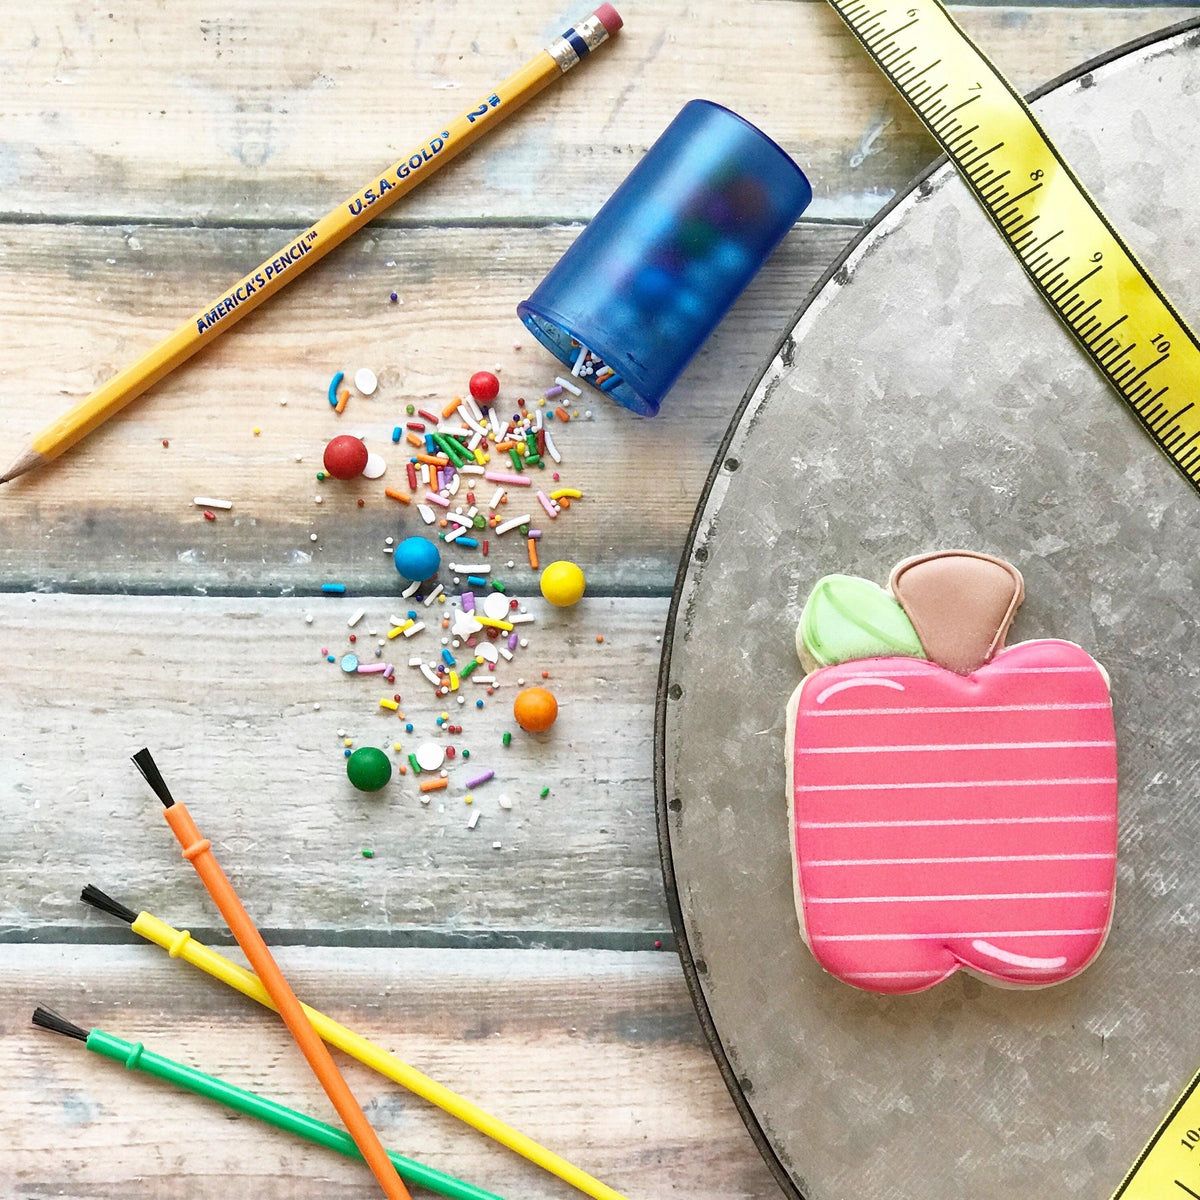 Chubby School Apple 2019 Cookie Cutter - Sweetleigh 